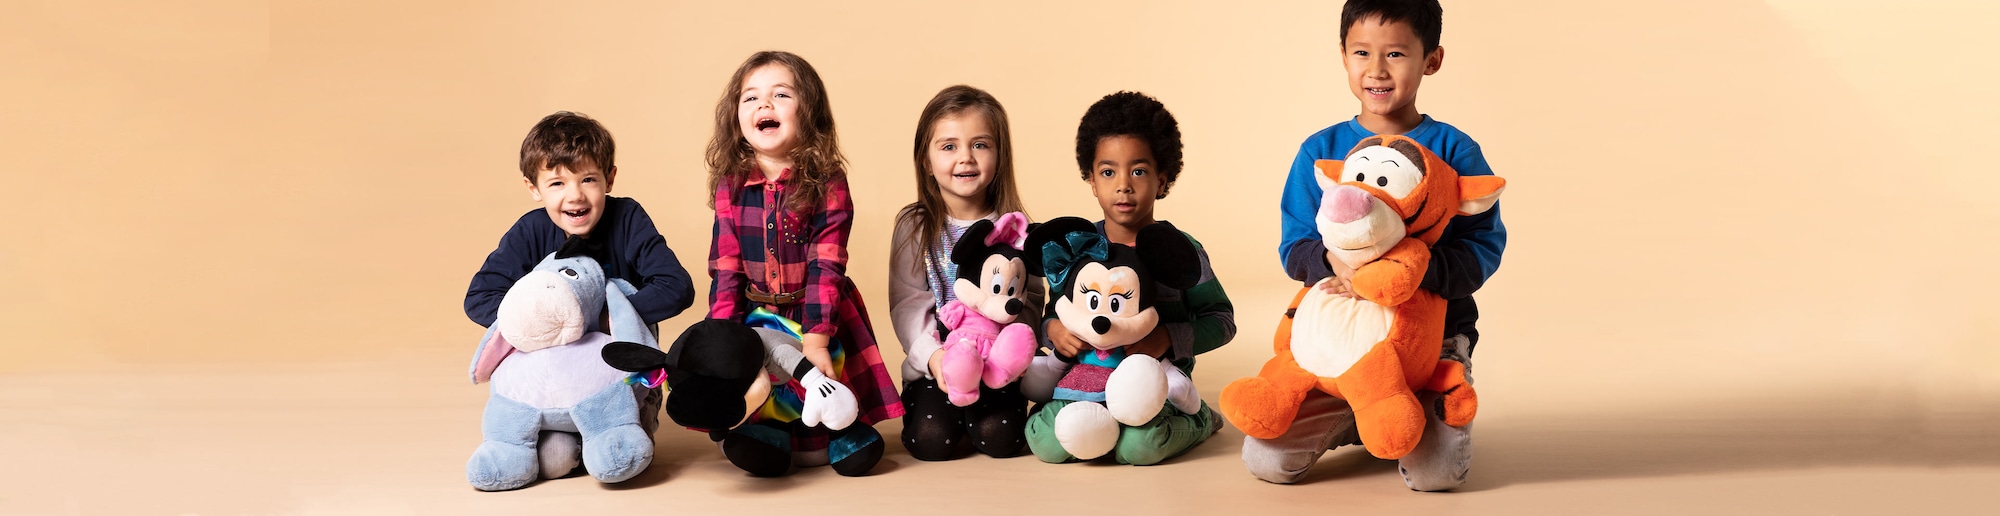 Disney Mode Fur Kinder Online Bei About You